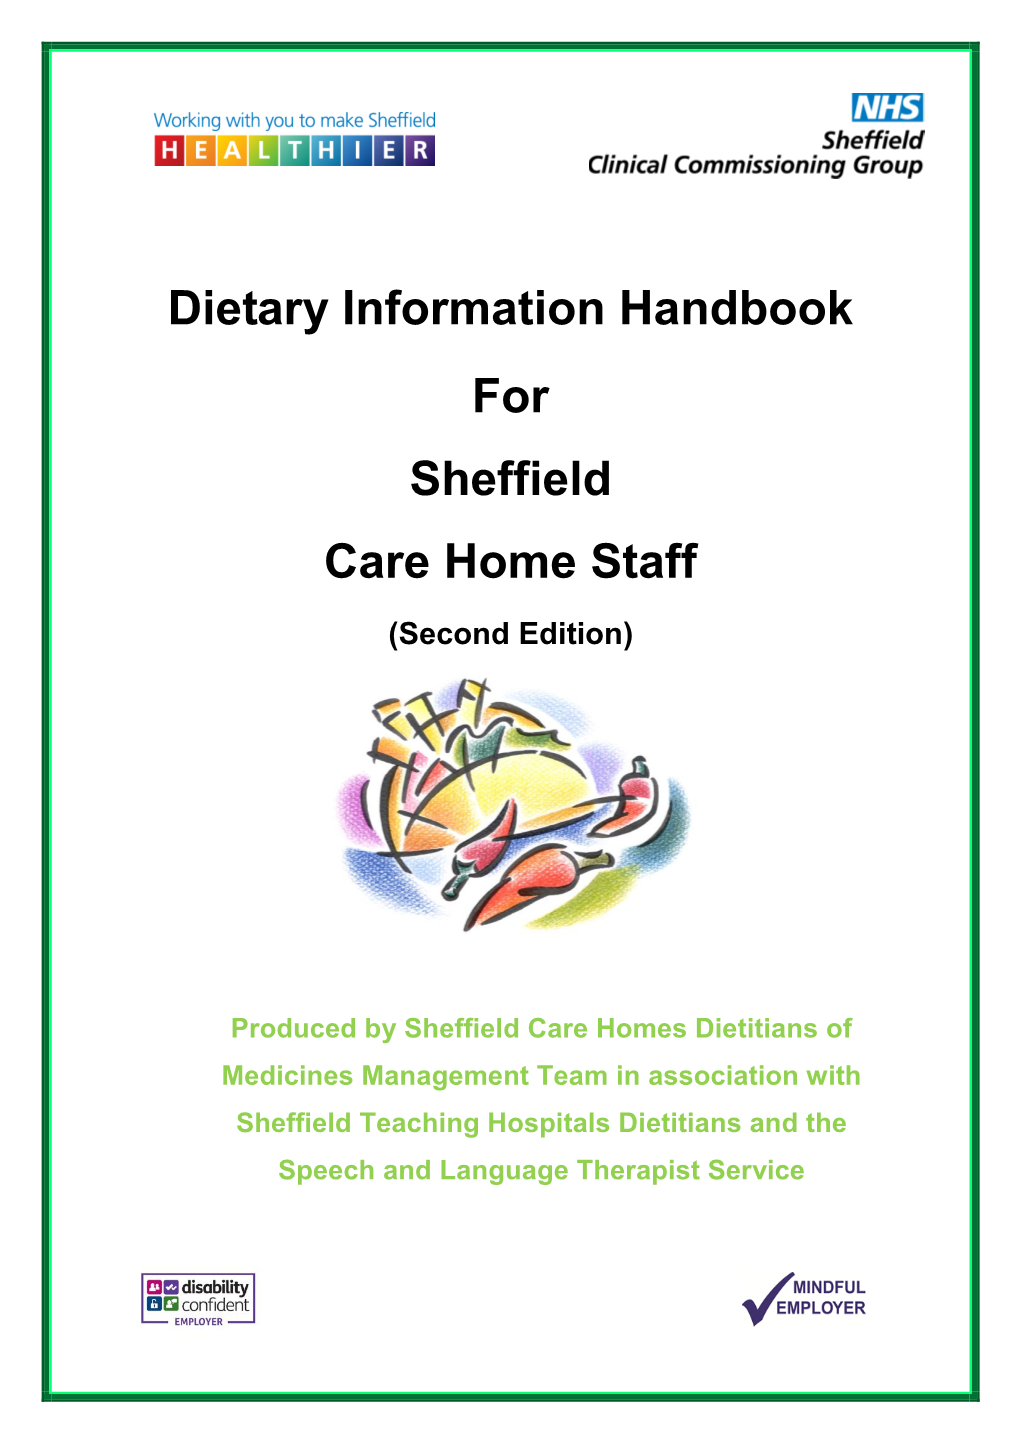 Dietary Information Handbook for Sheffield Care Home Staff